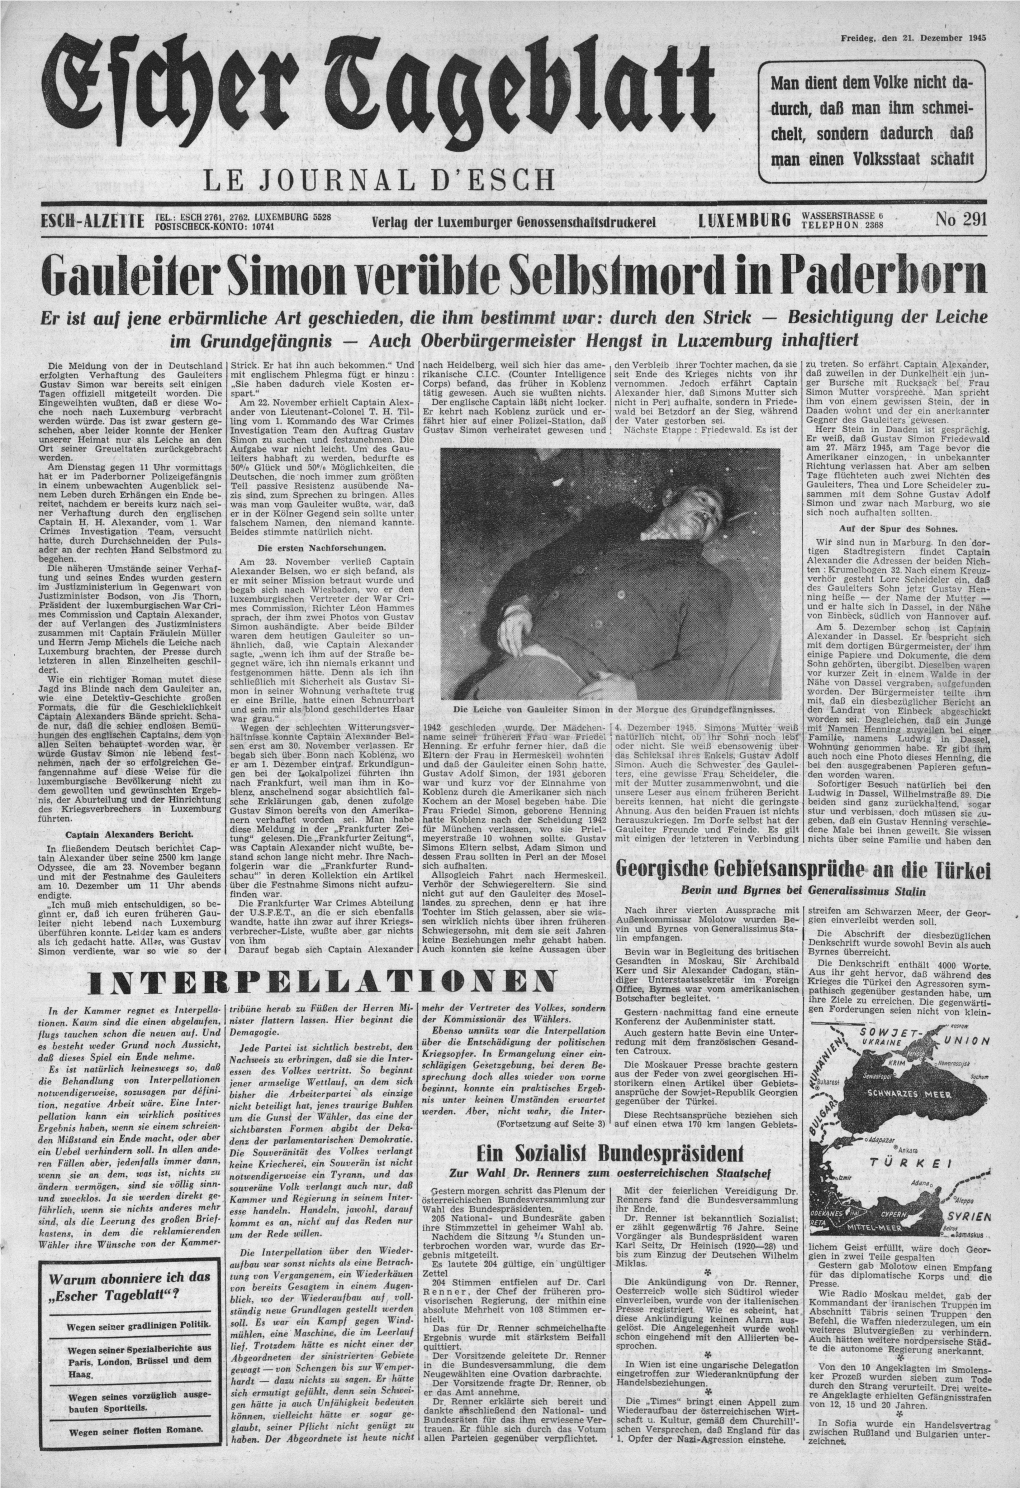 Gauleiter Simon Verübte Selbstmord in Paderborn